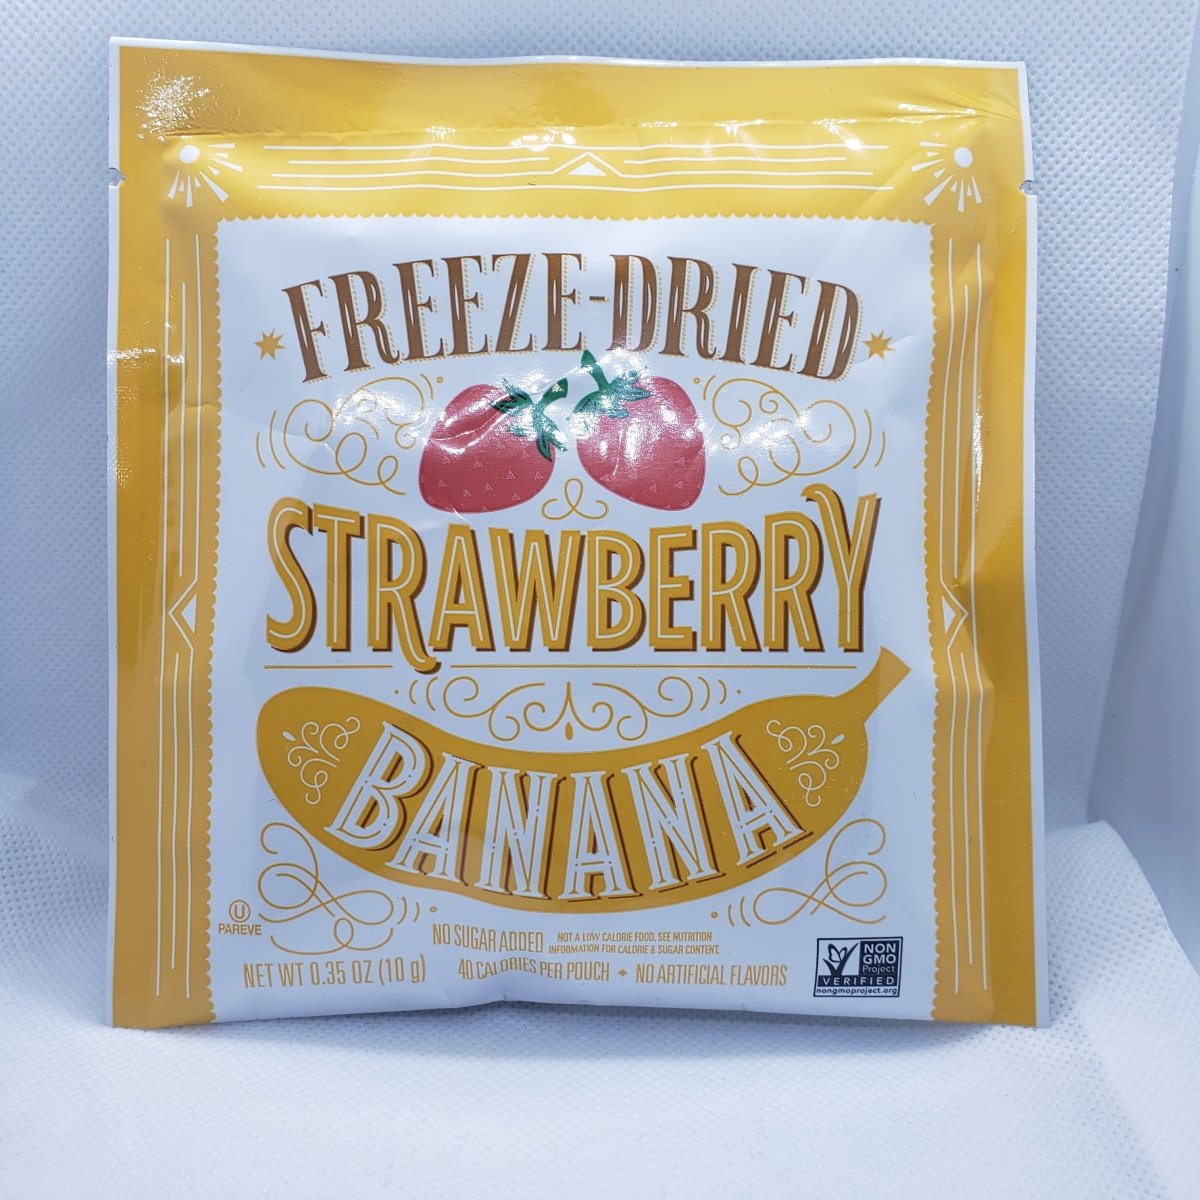 Strawberry + Banana - Dried Food - .35oz - 1 Bag